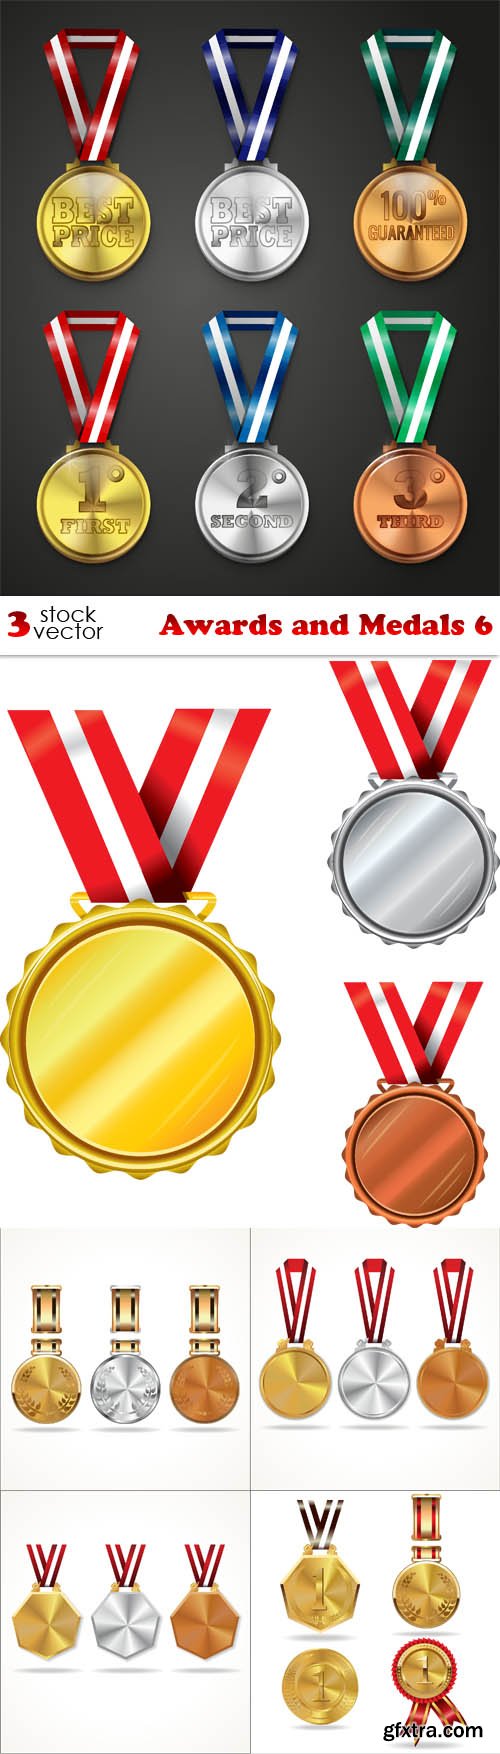 Vectors - Awards and Medals 6